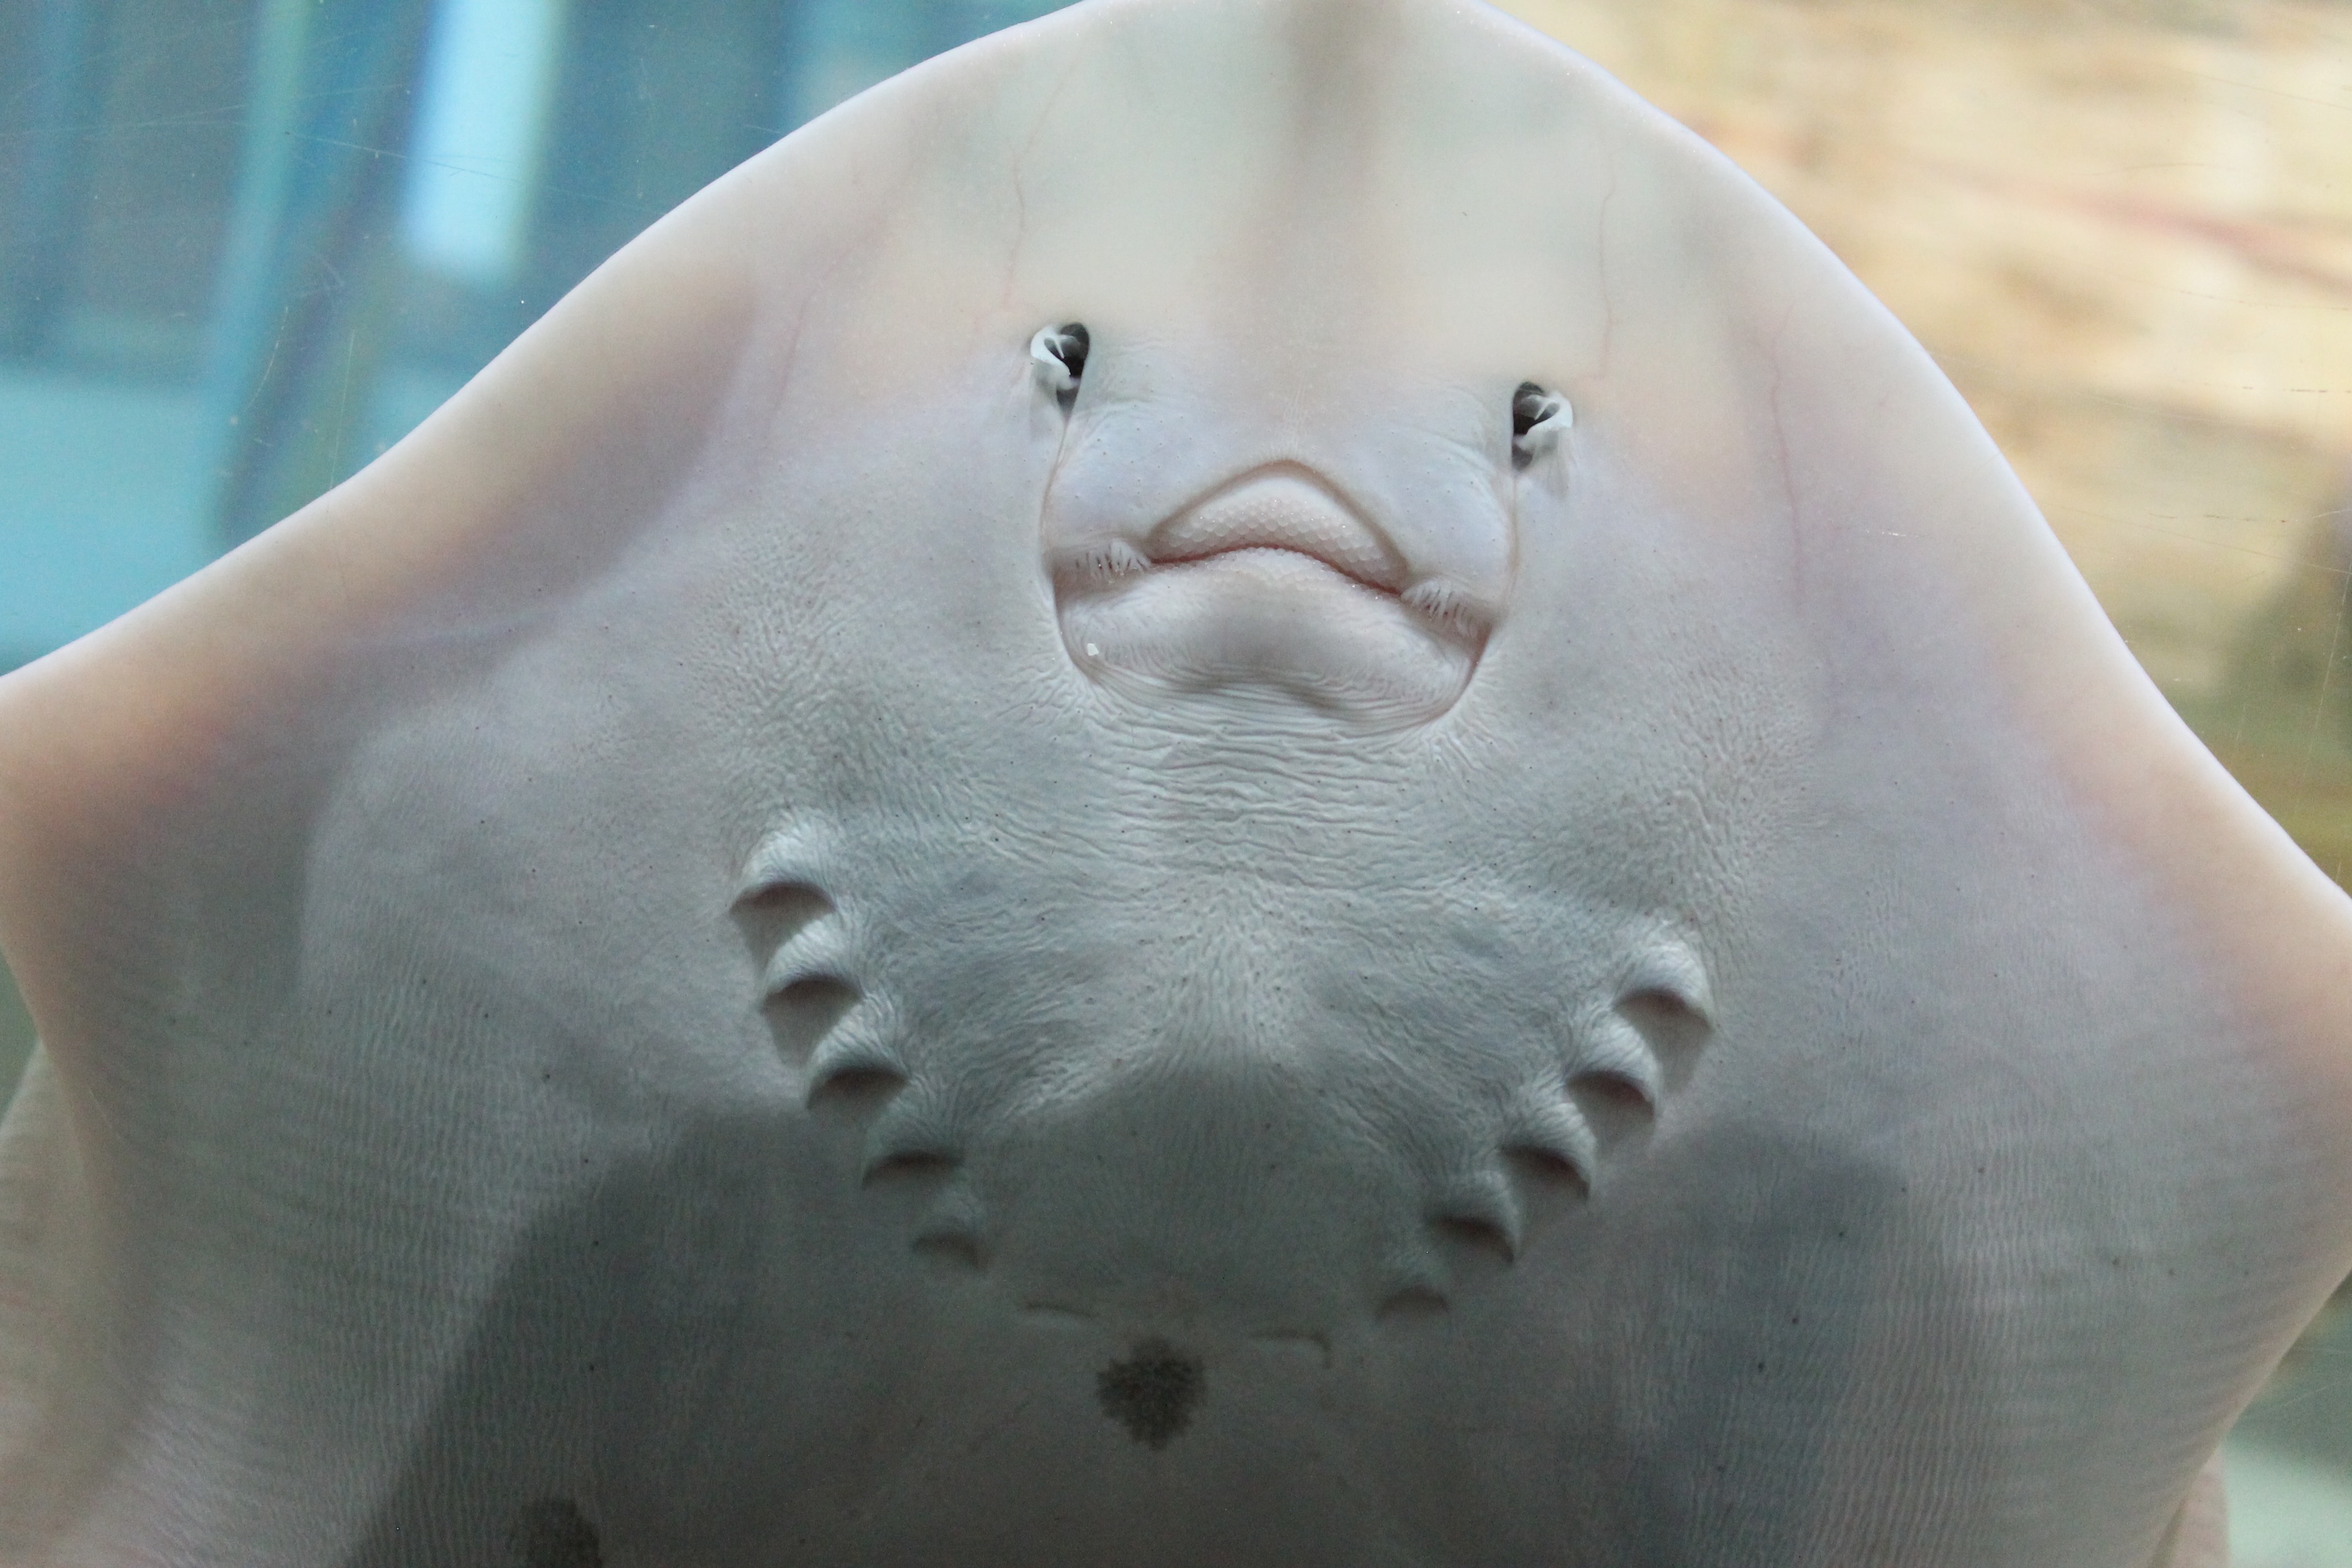 A smiling stingray (its underside) in Portaferry Aquarium. © 2016 Cordula Scherer.